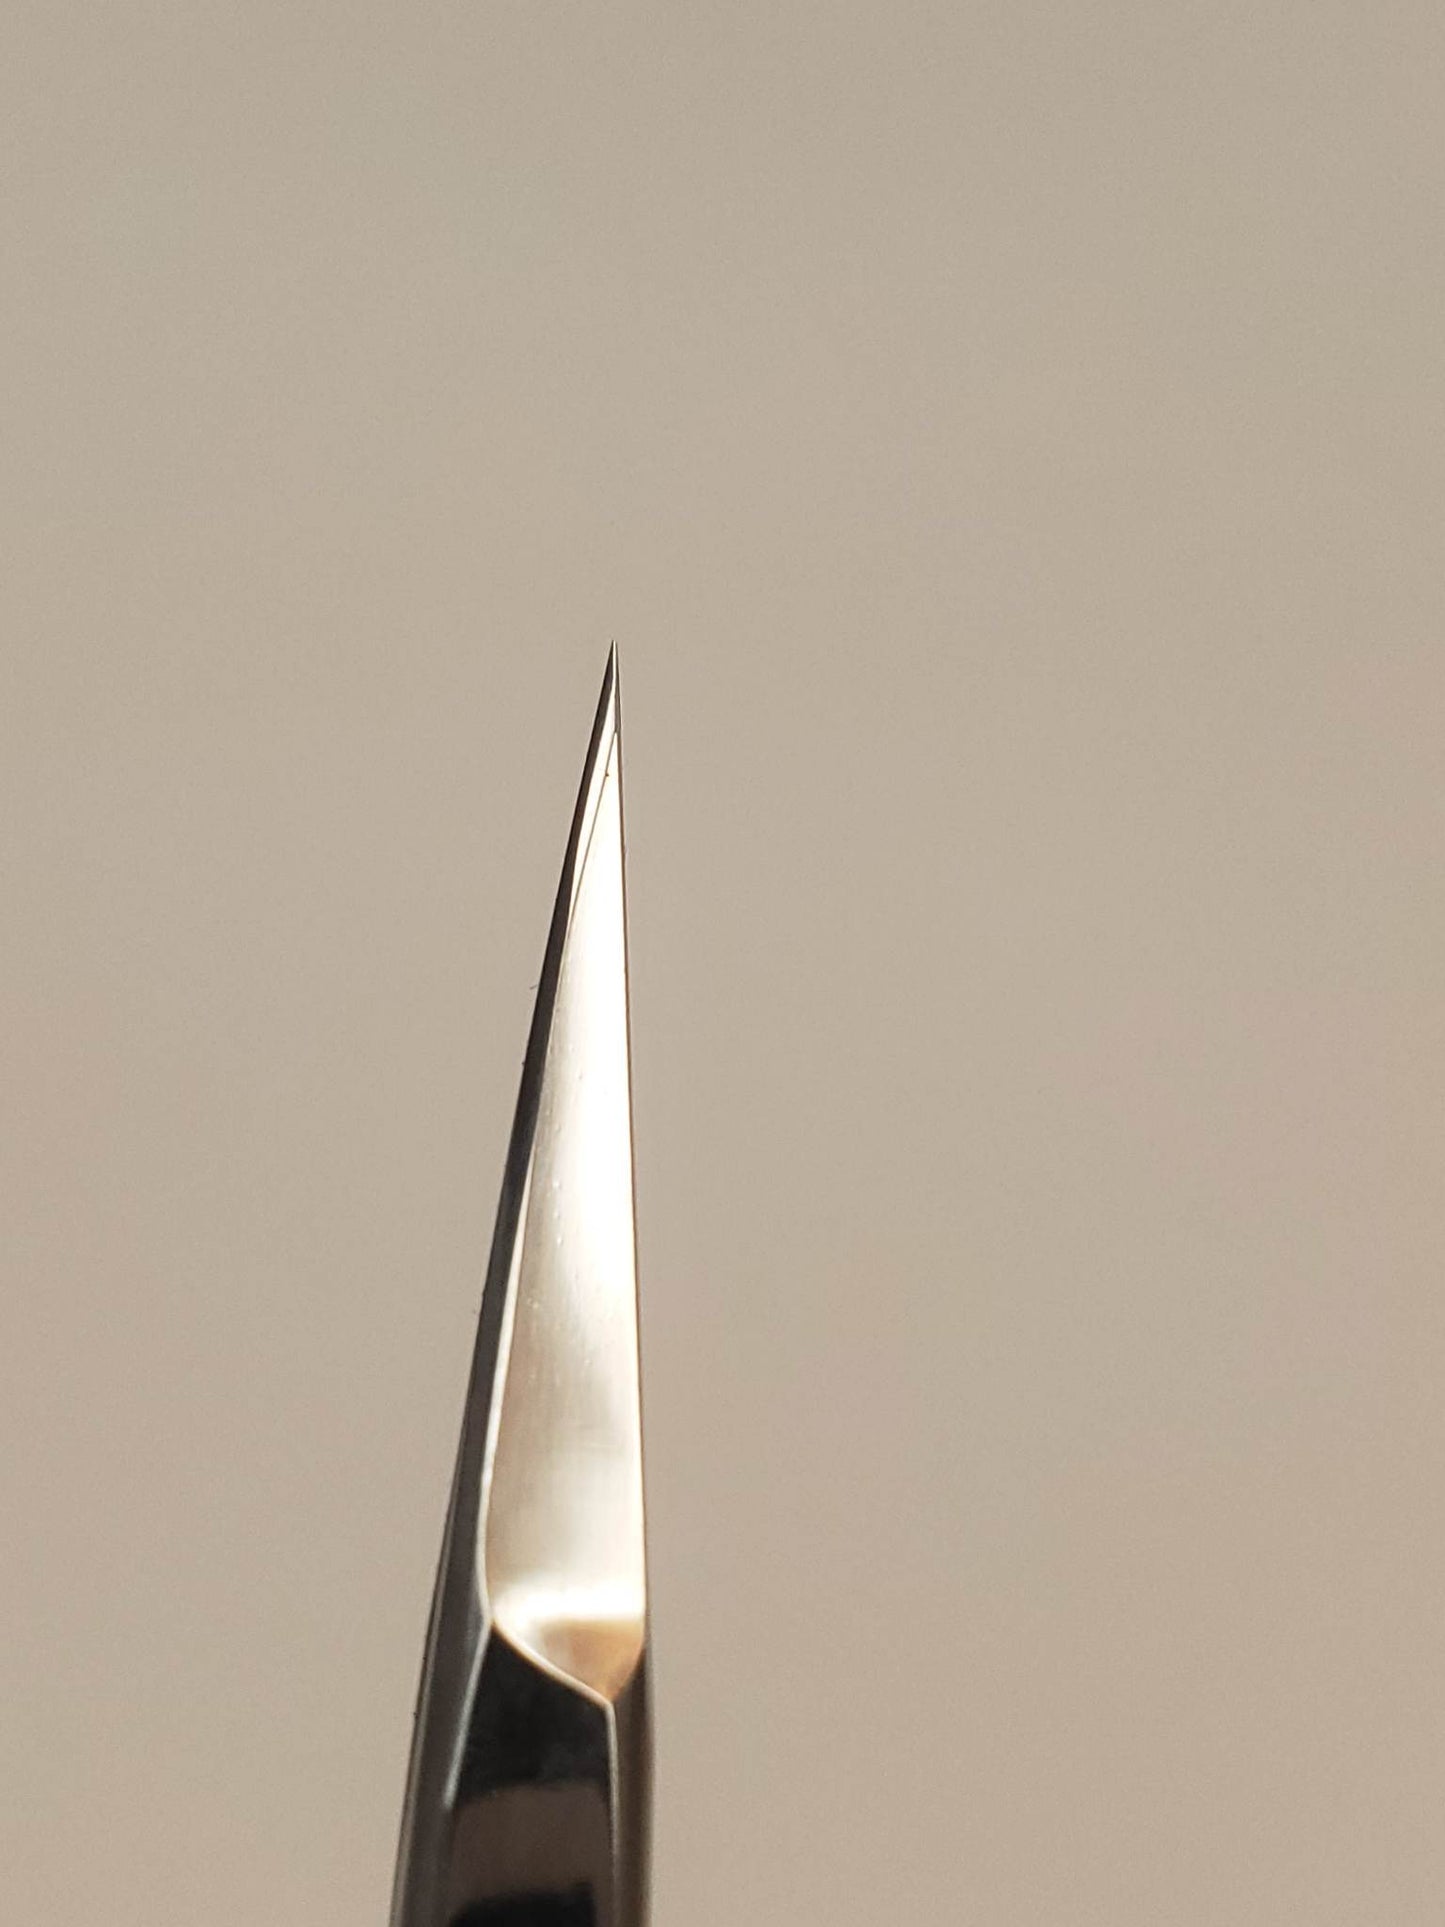 Atlantic Nail Art Studio - Cuticle scissors 110.30